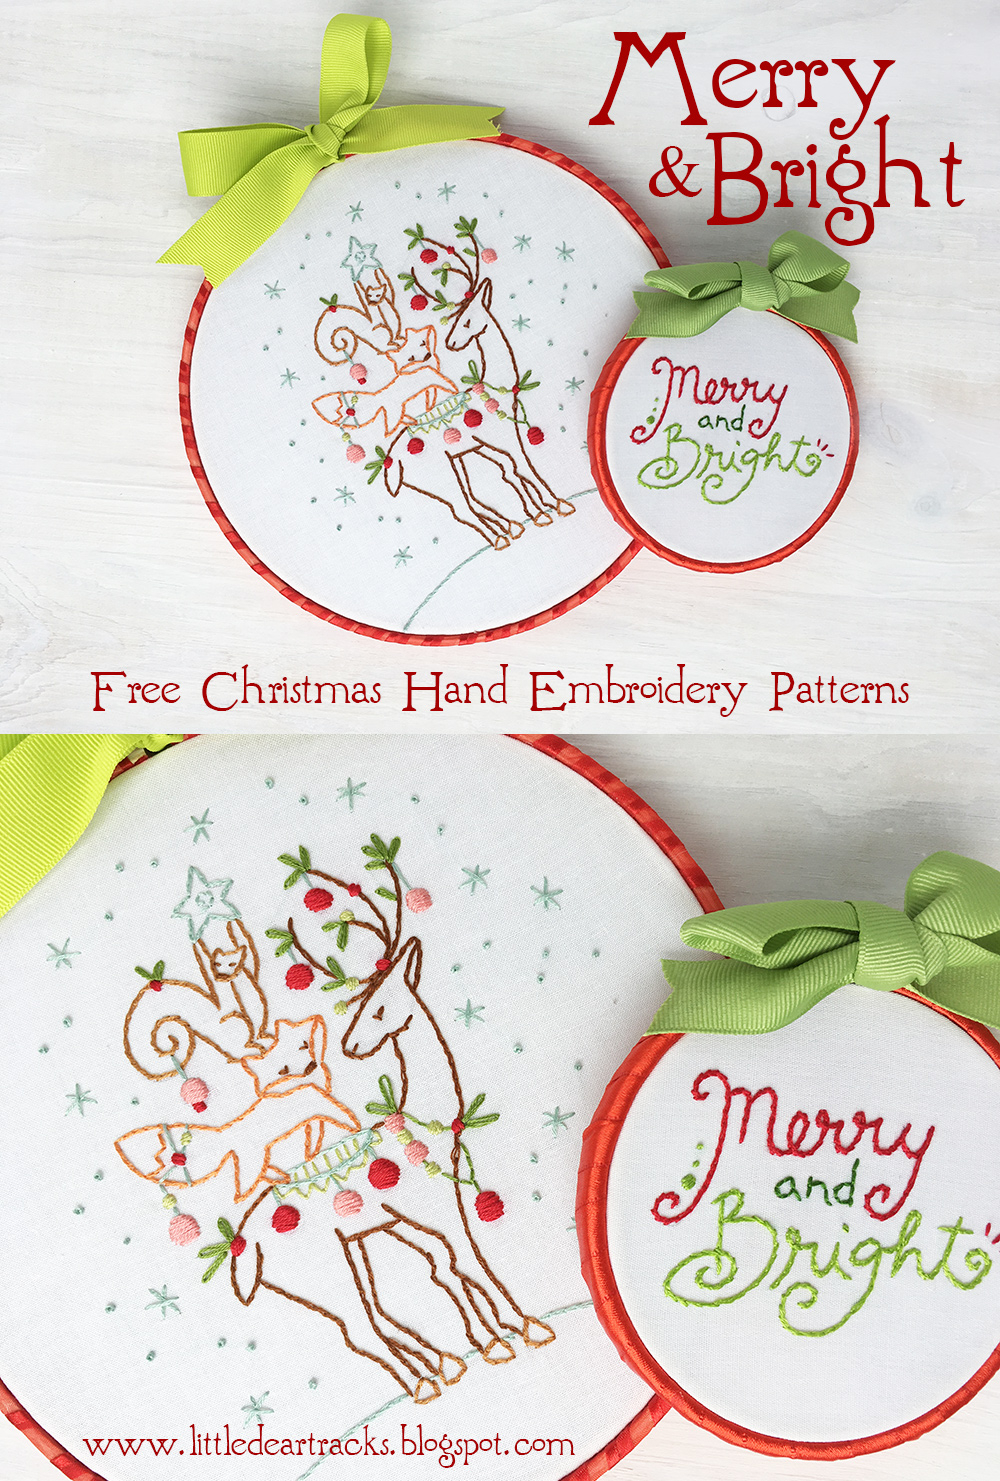 Hand Embroidery Patterns Free Little Dear Tracks Free Christmas Embroidery Patterns